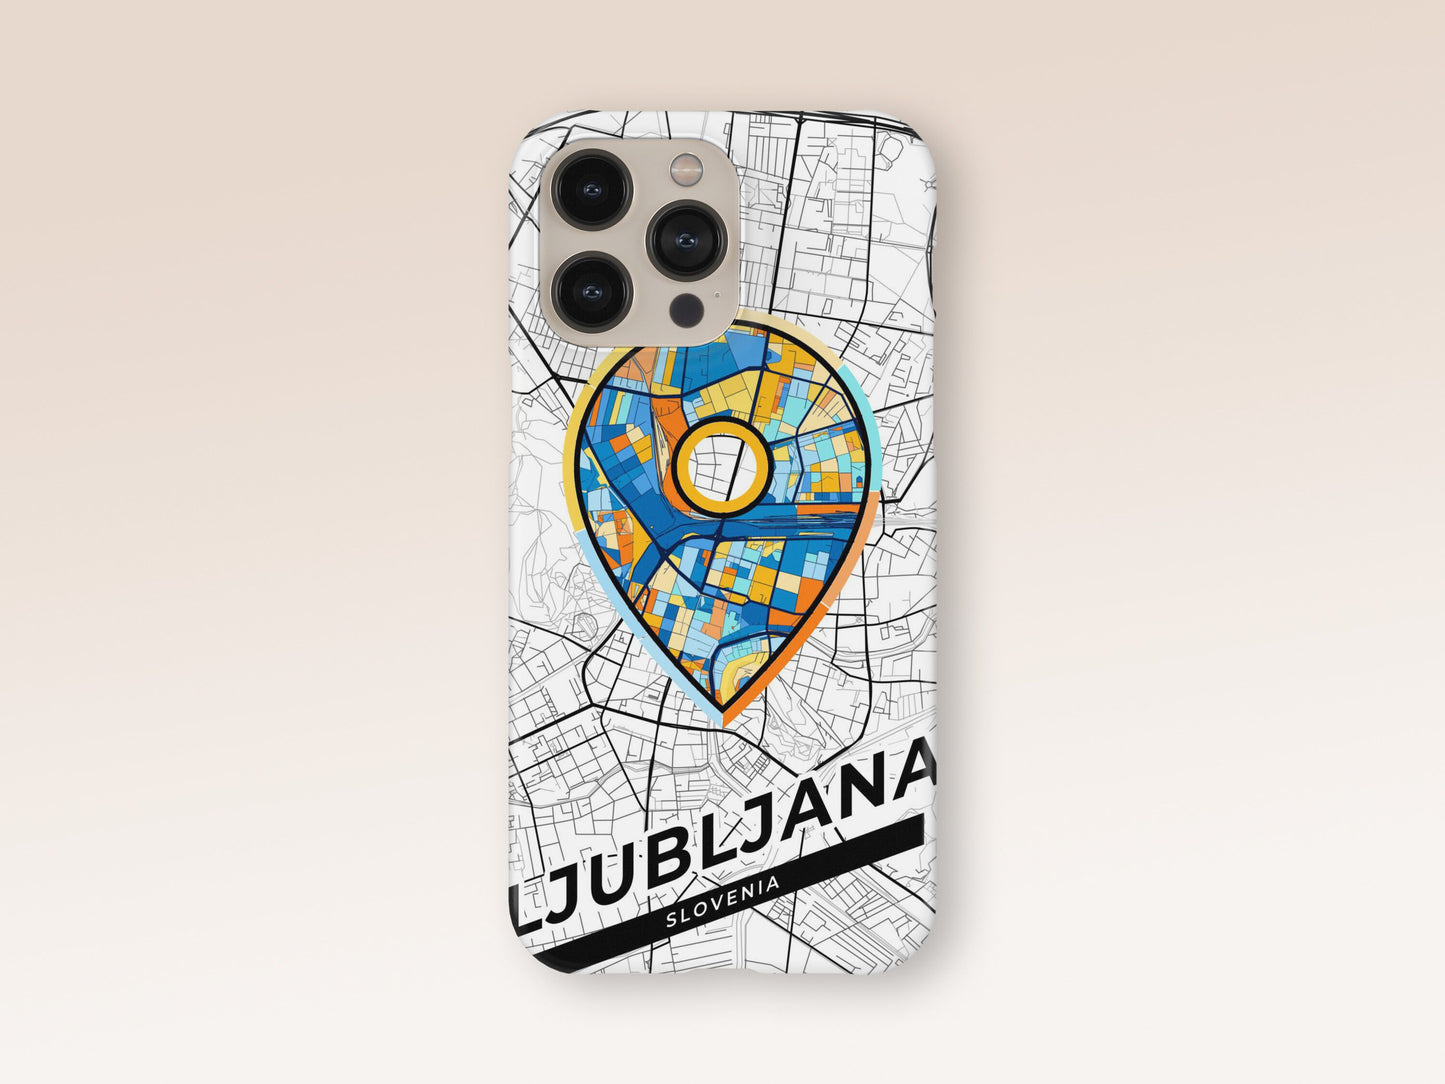 Ljubljana Slovenia slim phone case with colorful icon. Birthday, wedding or housewarming gift. Couple match cases. 1